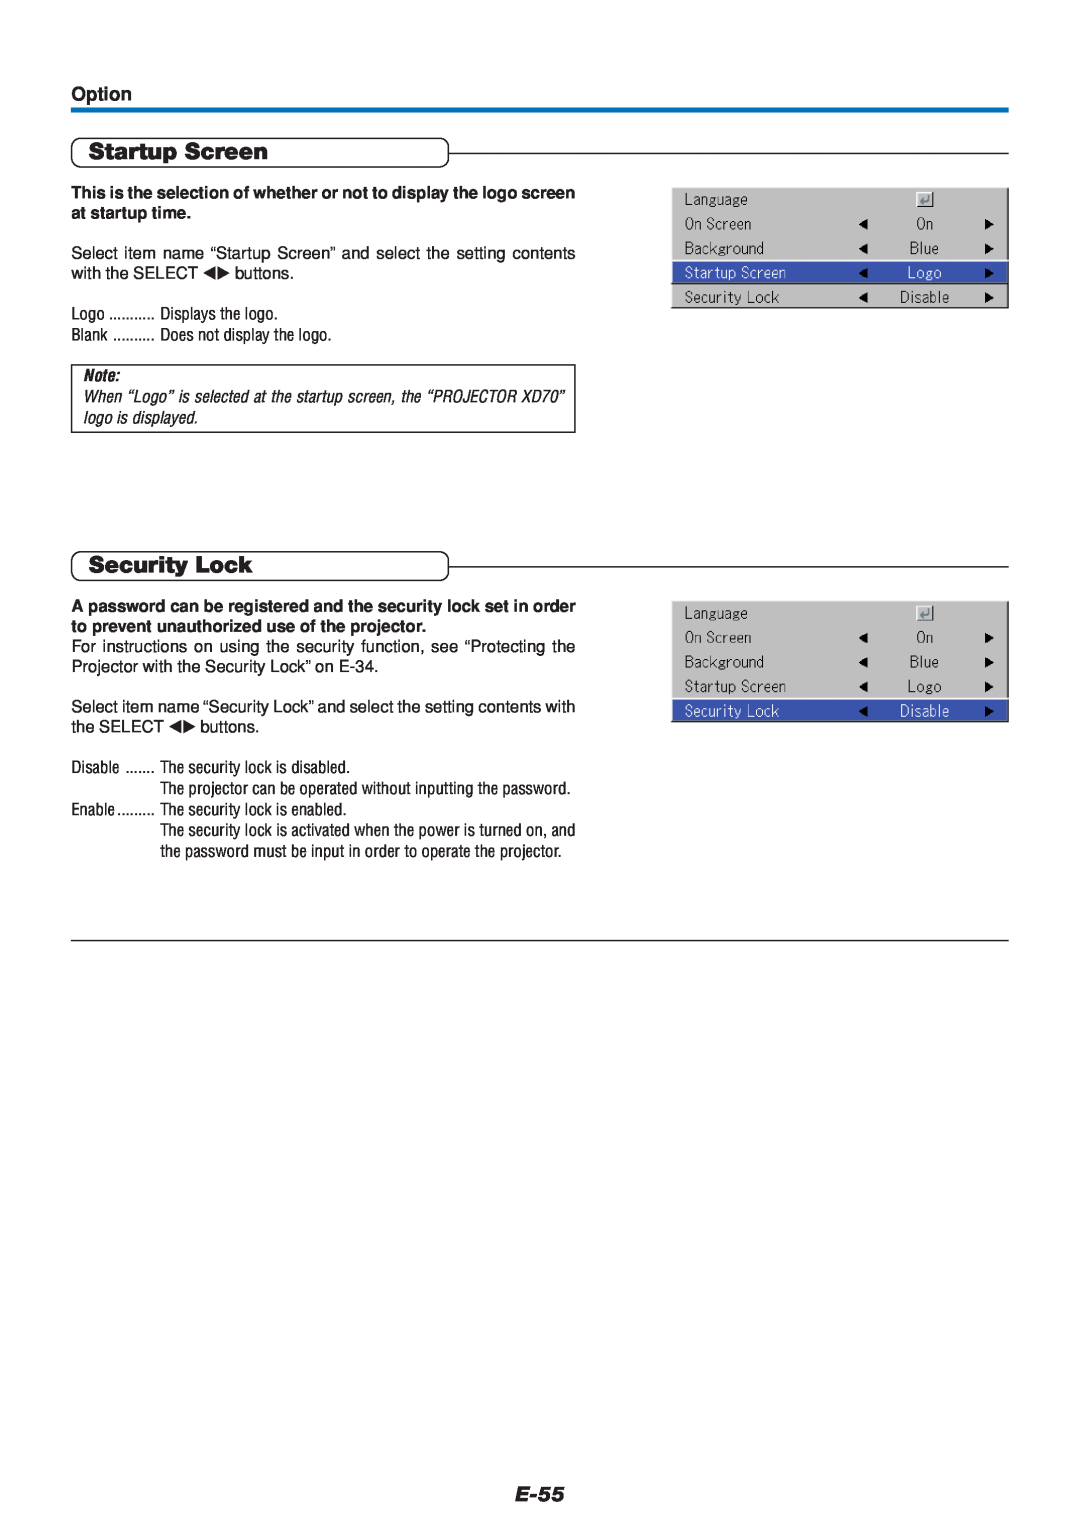 Mitsubishi Electronics DATA PROJECTOR user manual Startup Screen, Security Lock, E-55, Option 